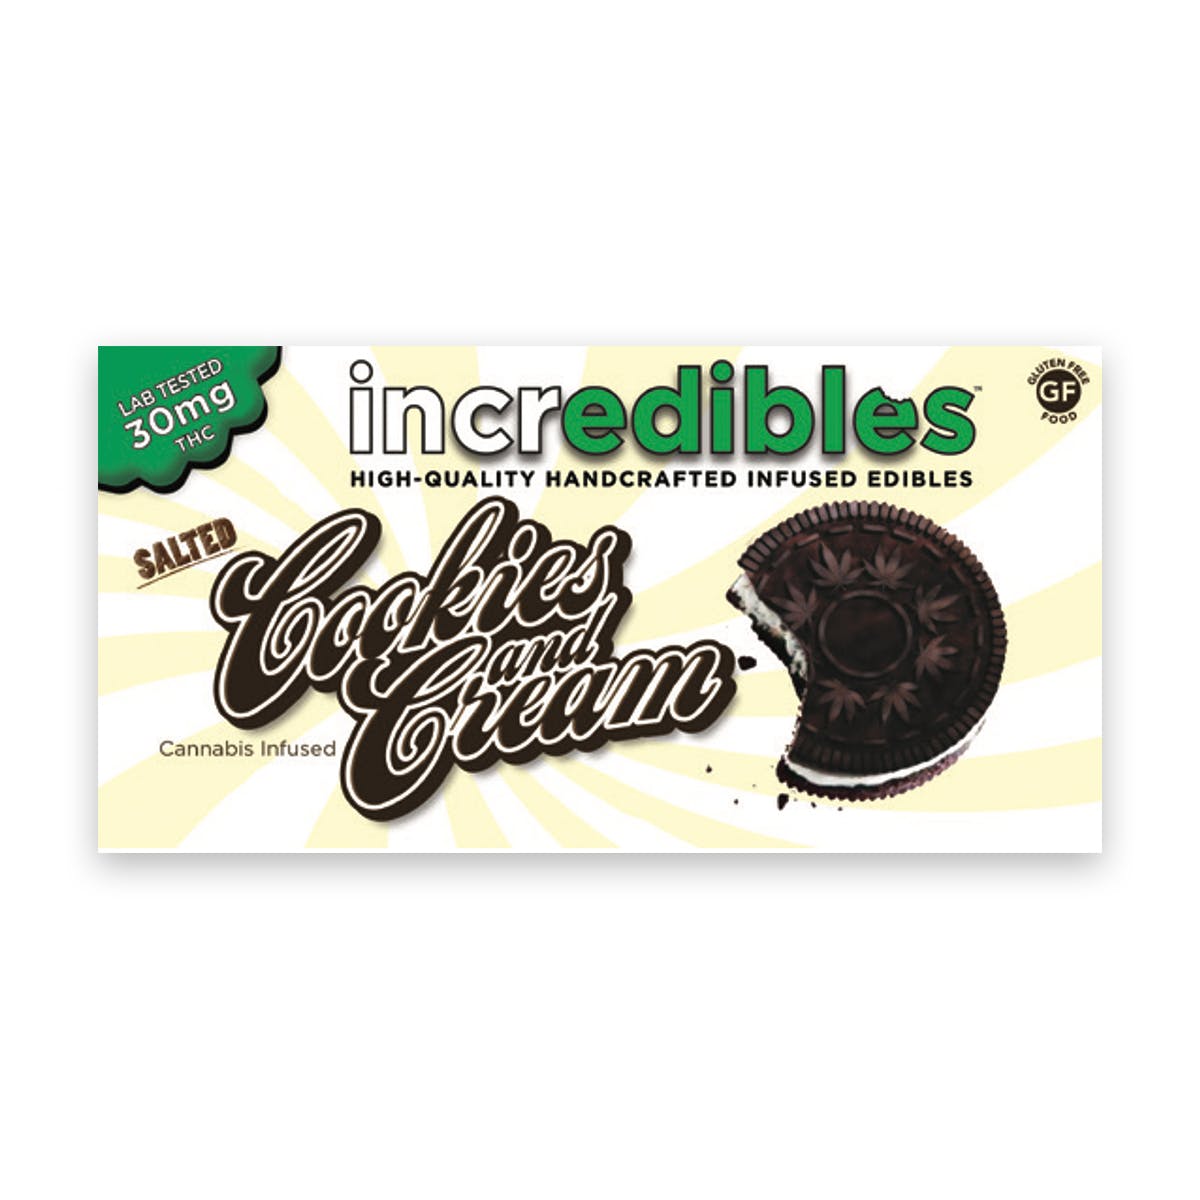 edible-incredibles-salted-cookies-a-cream-2c-30mg-rec